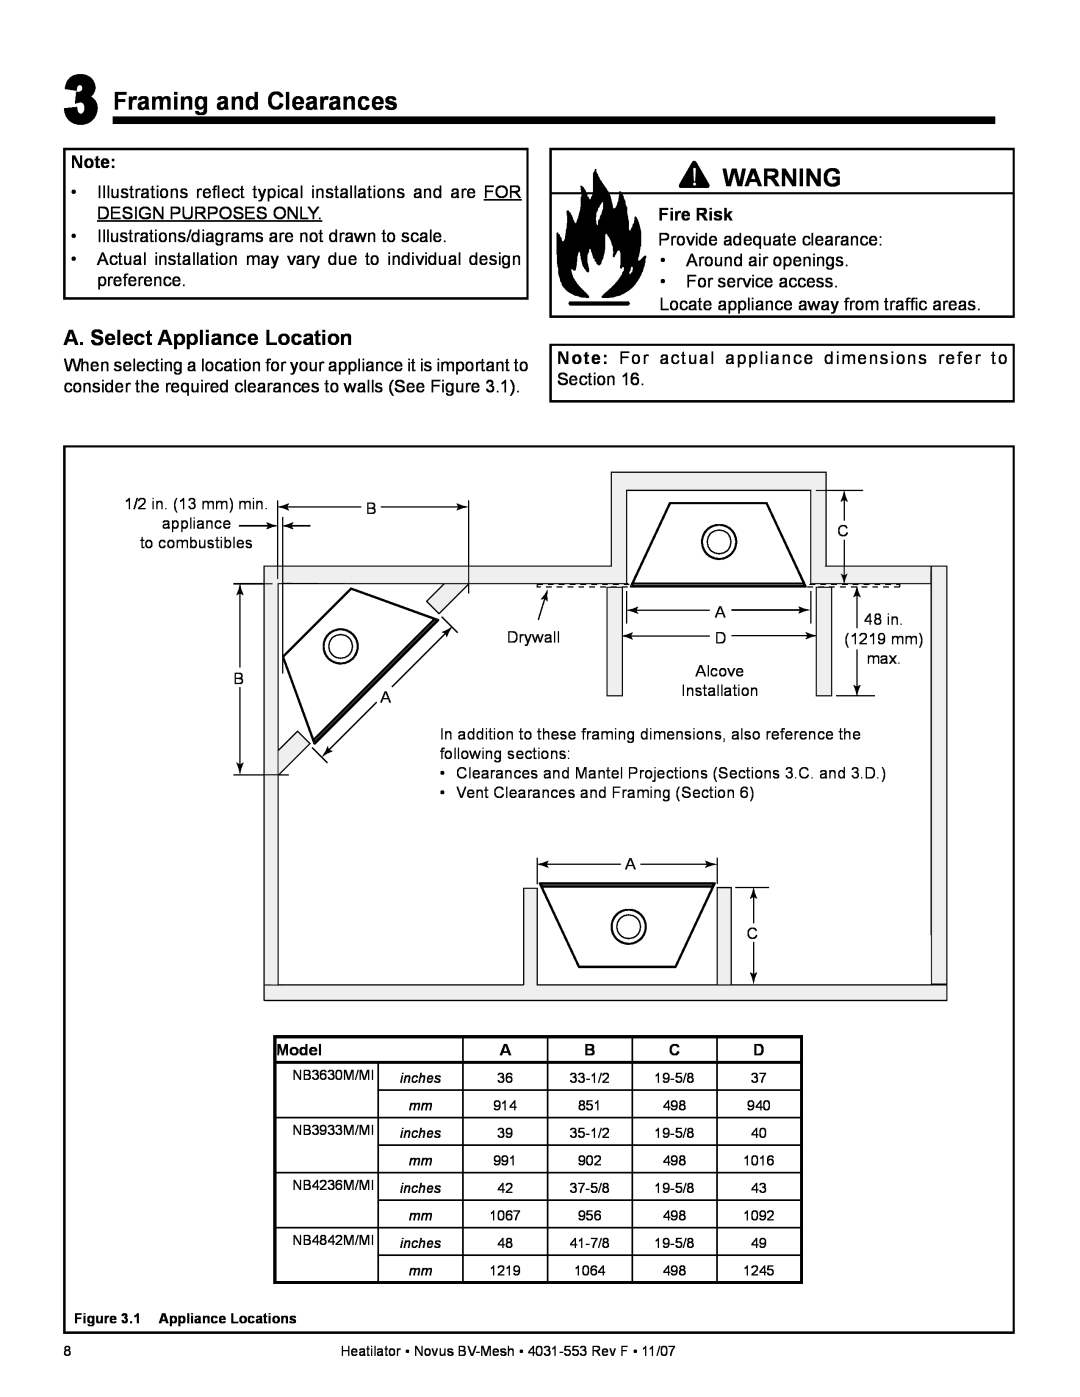 Heatiator NB4236MI, NB4842MI, NB3933MI, NB3630MI Framing and Clearances, A. Select Appliance Location, Fire Risk 